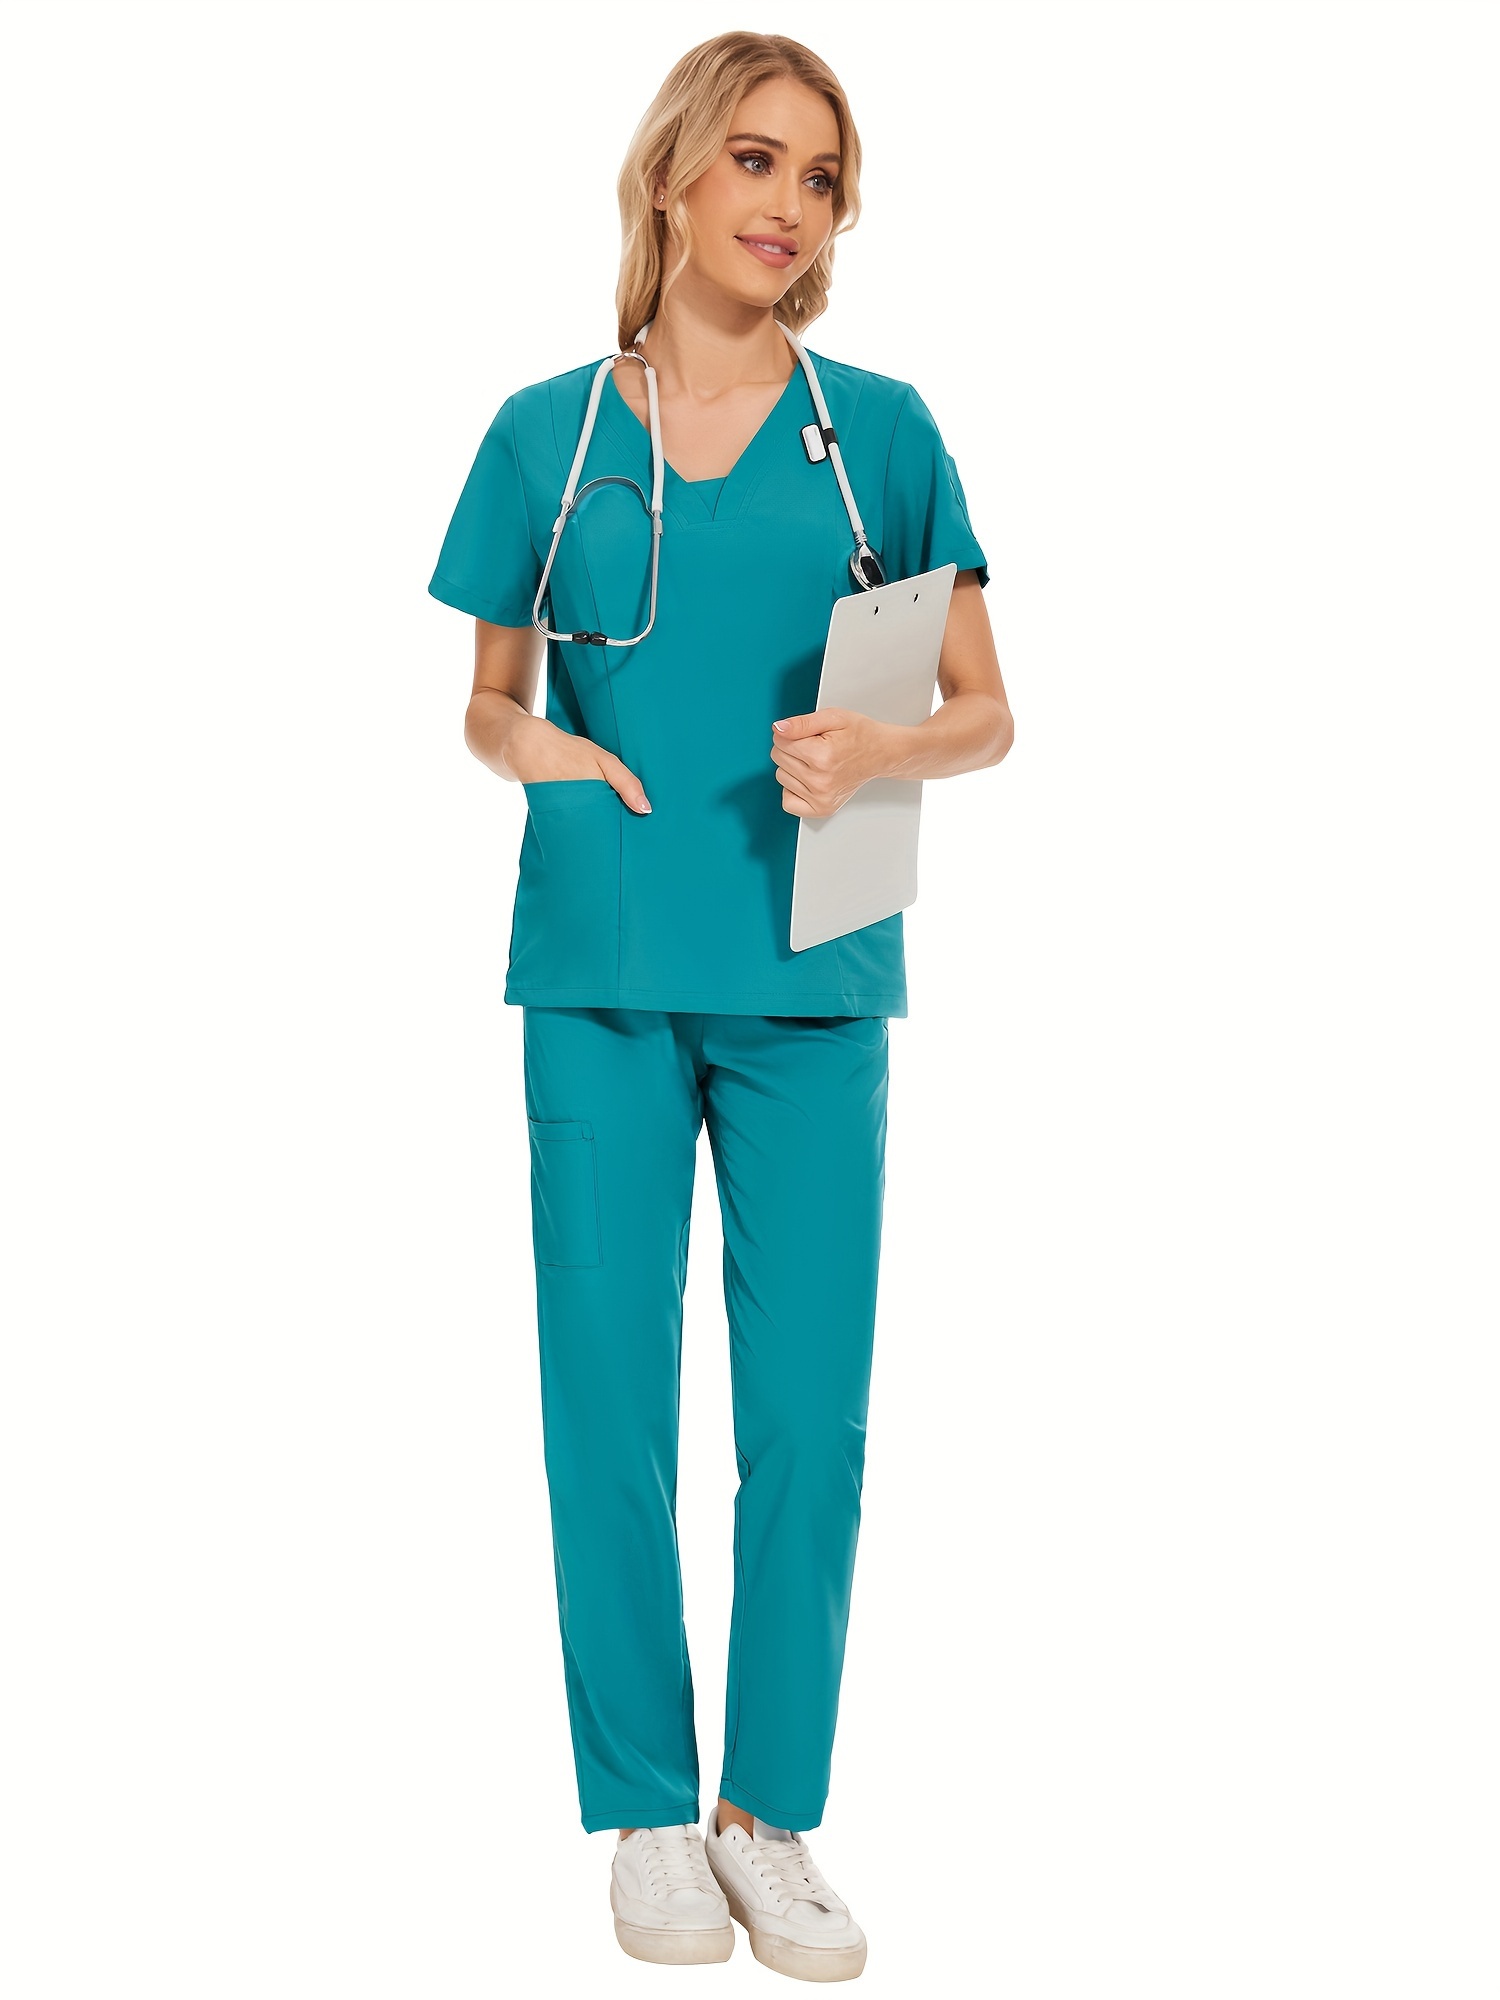 Medical Vest Tunic Scrub Uniform Nurse V-NECK White trim Hospital work wear  top